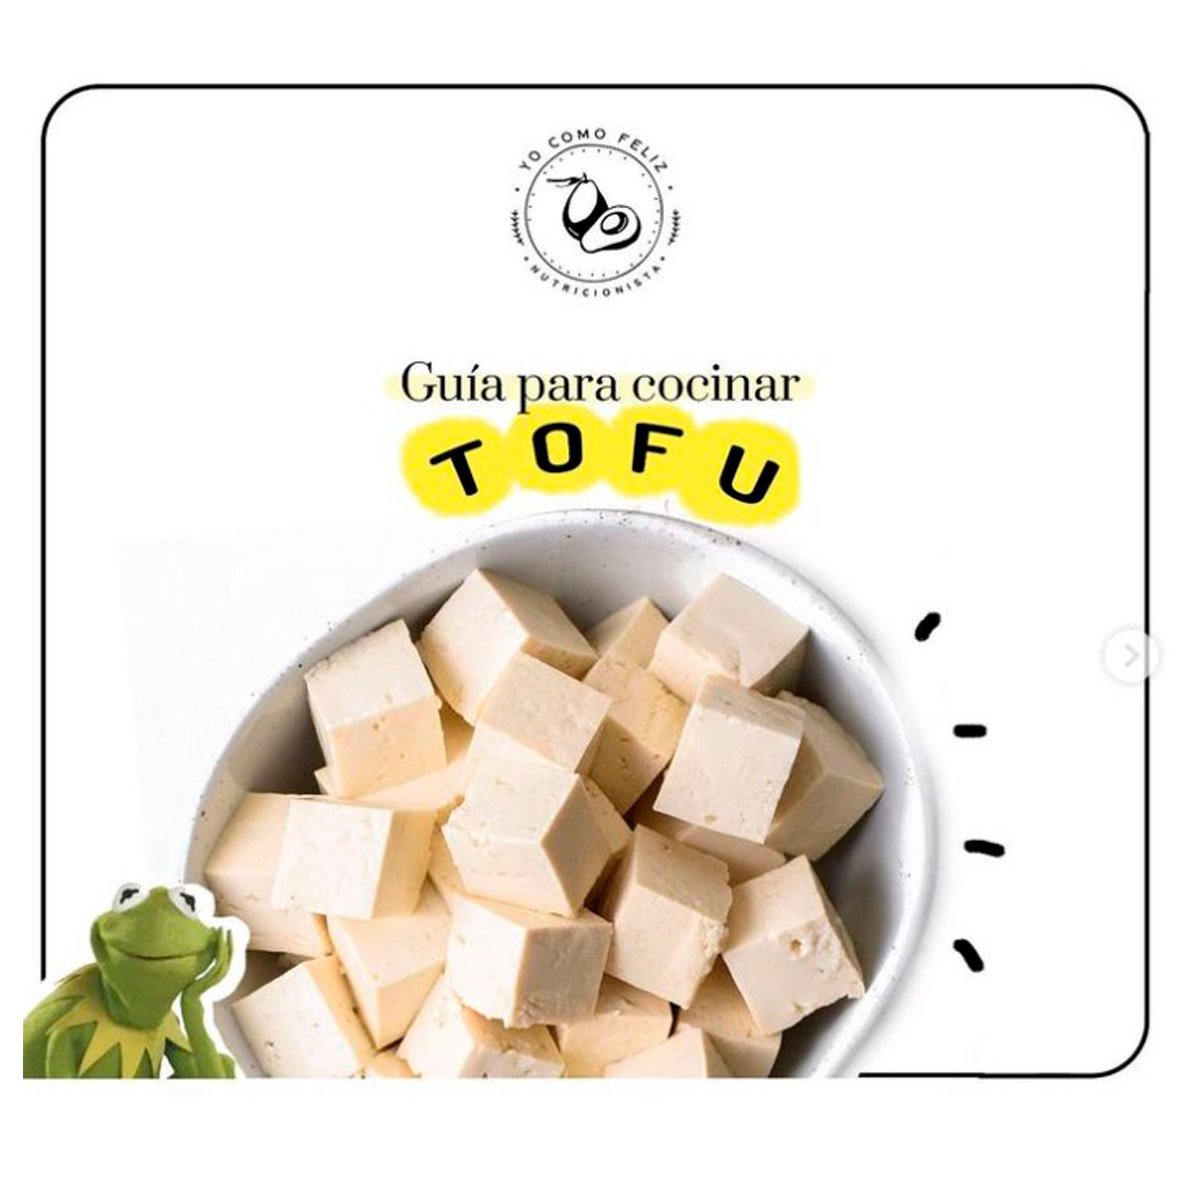 Guía para cocinar Tofu